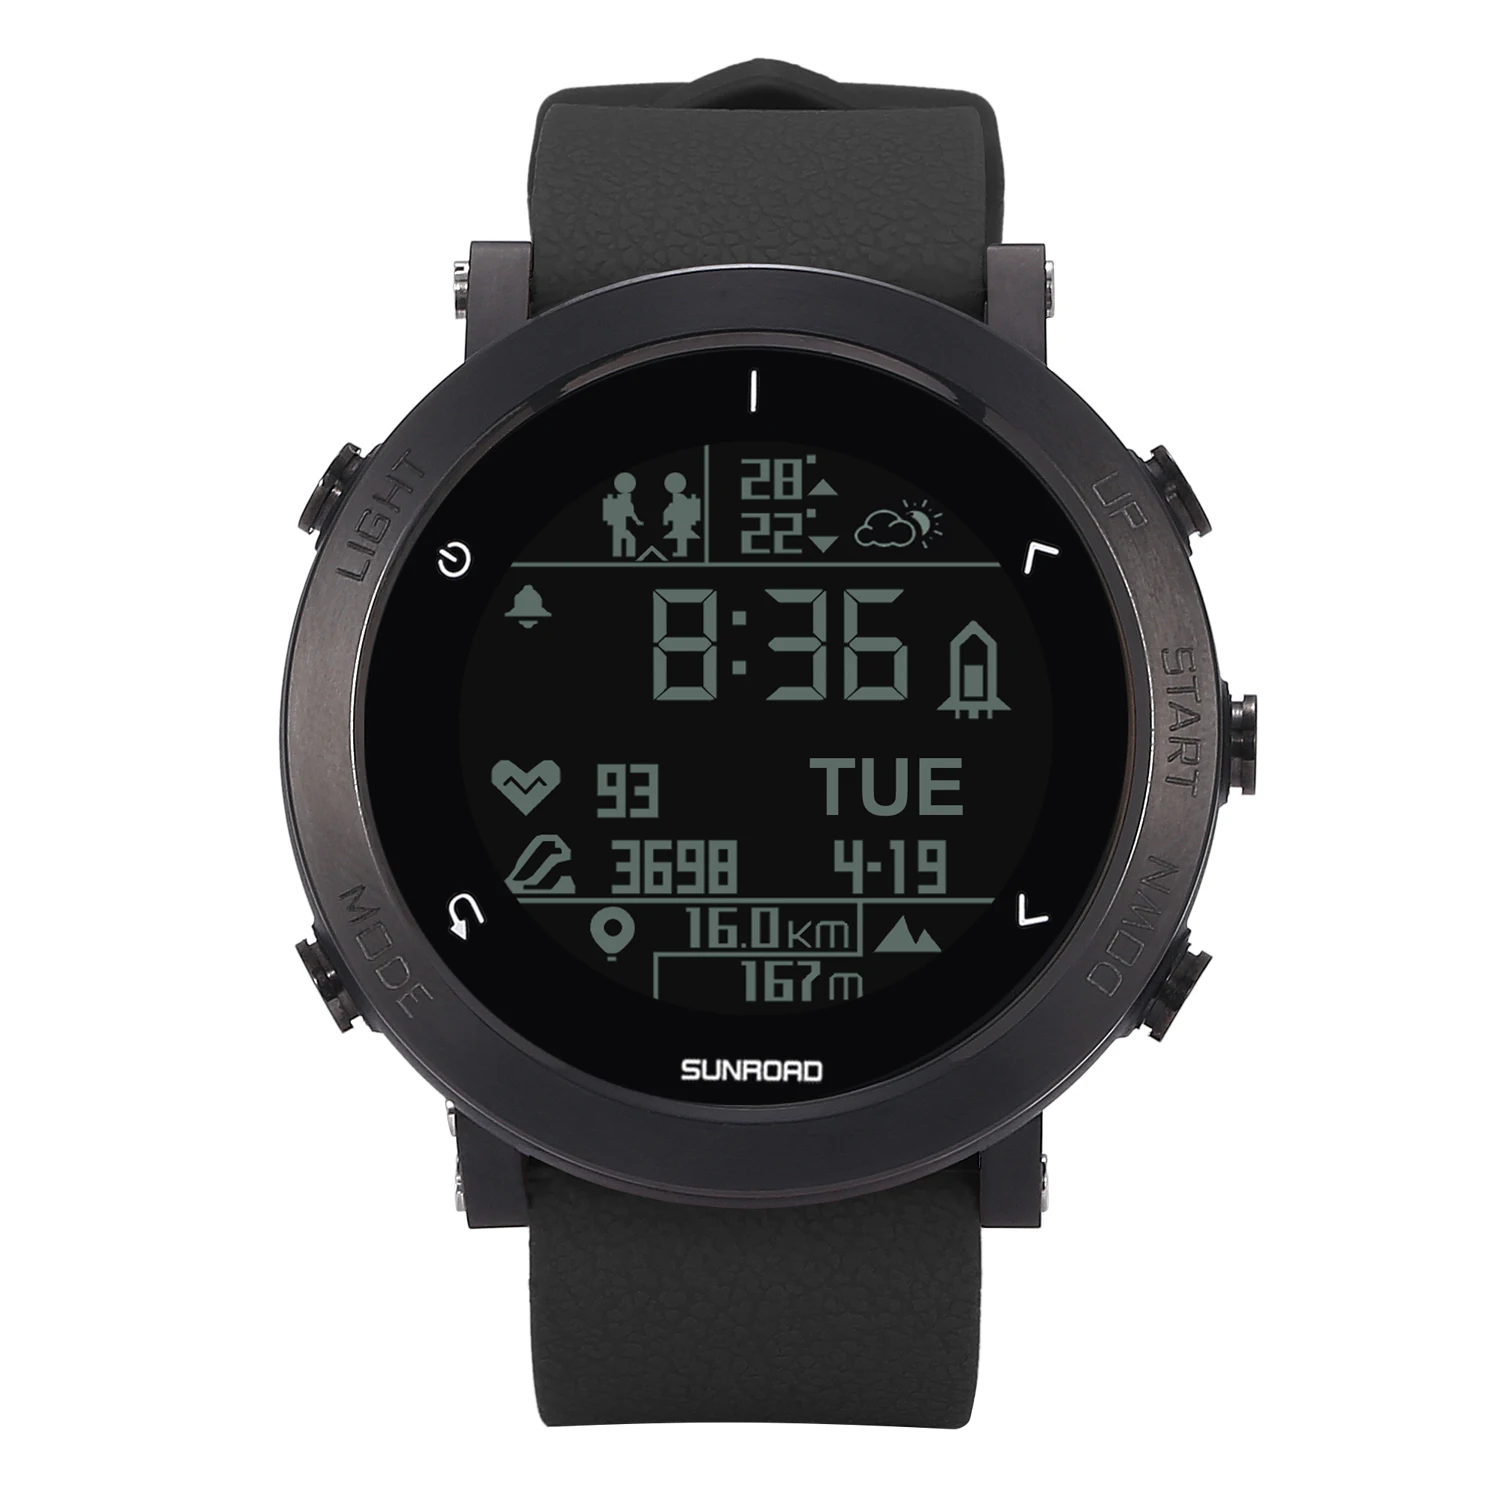 Sunroad GPS Sports men Watches Smart Digital Watches Heart Rate Swim Triathlon Altimeter Compass 5ATM Waterproof Fitness Track